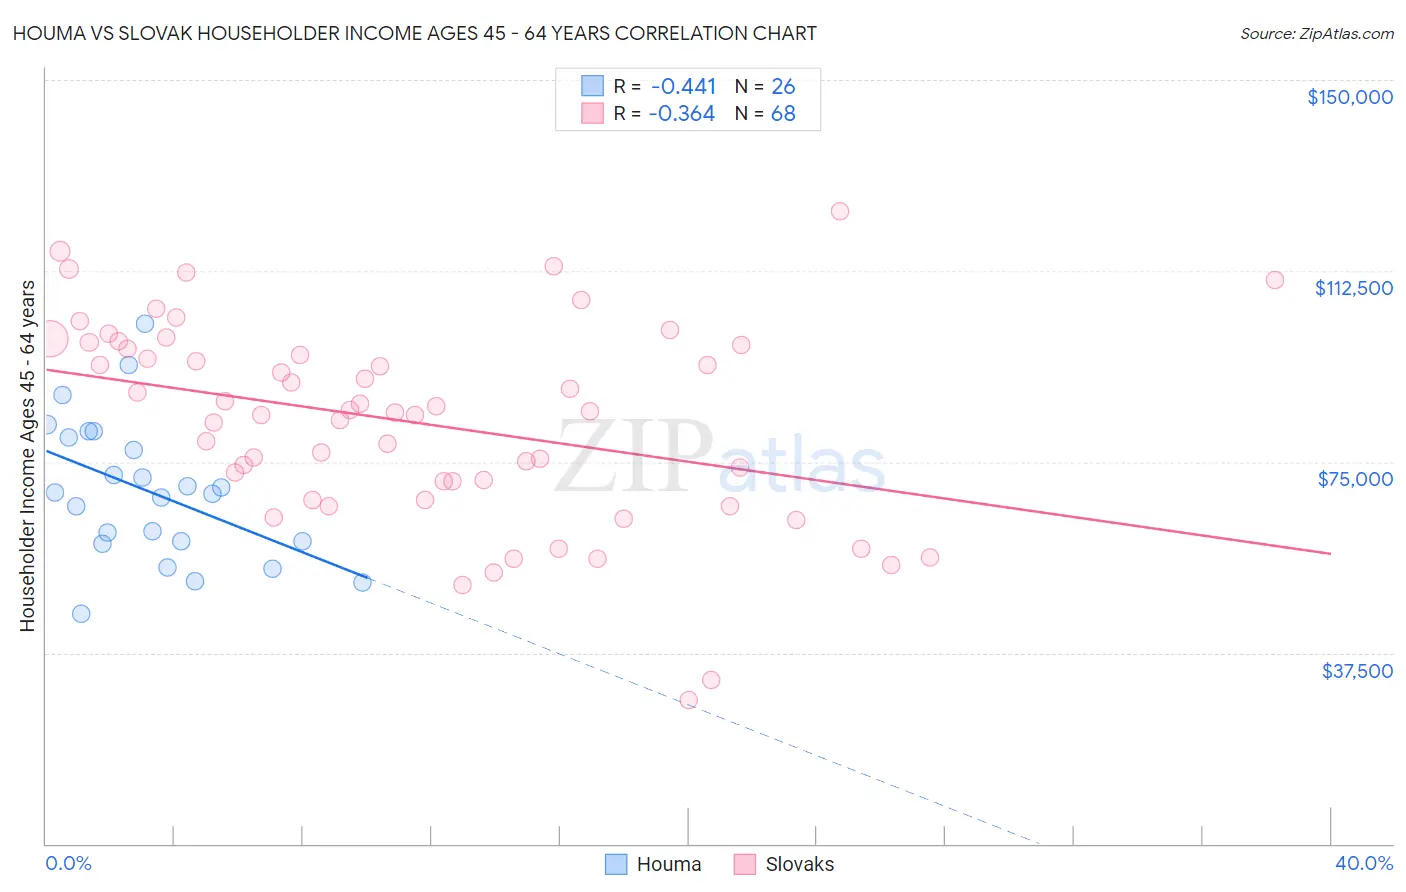 Houma vs Slovak Householder Income Ages 45 - 64 years